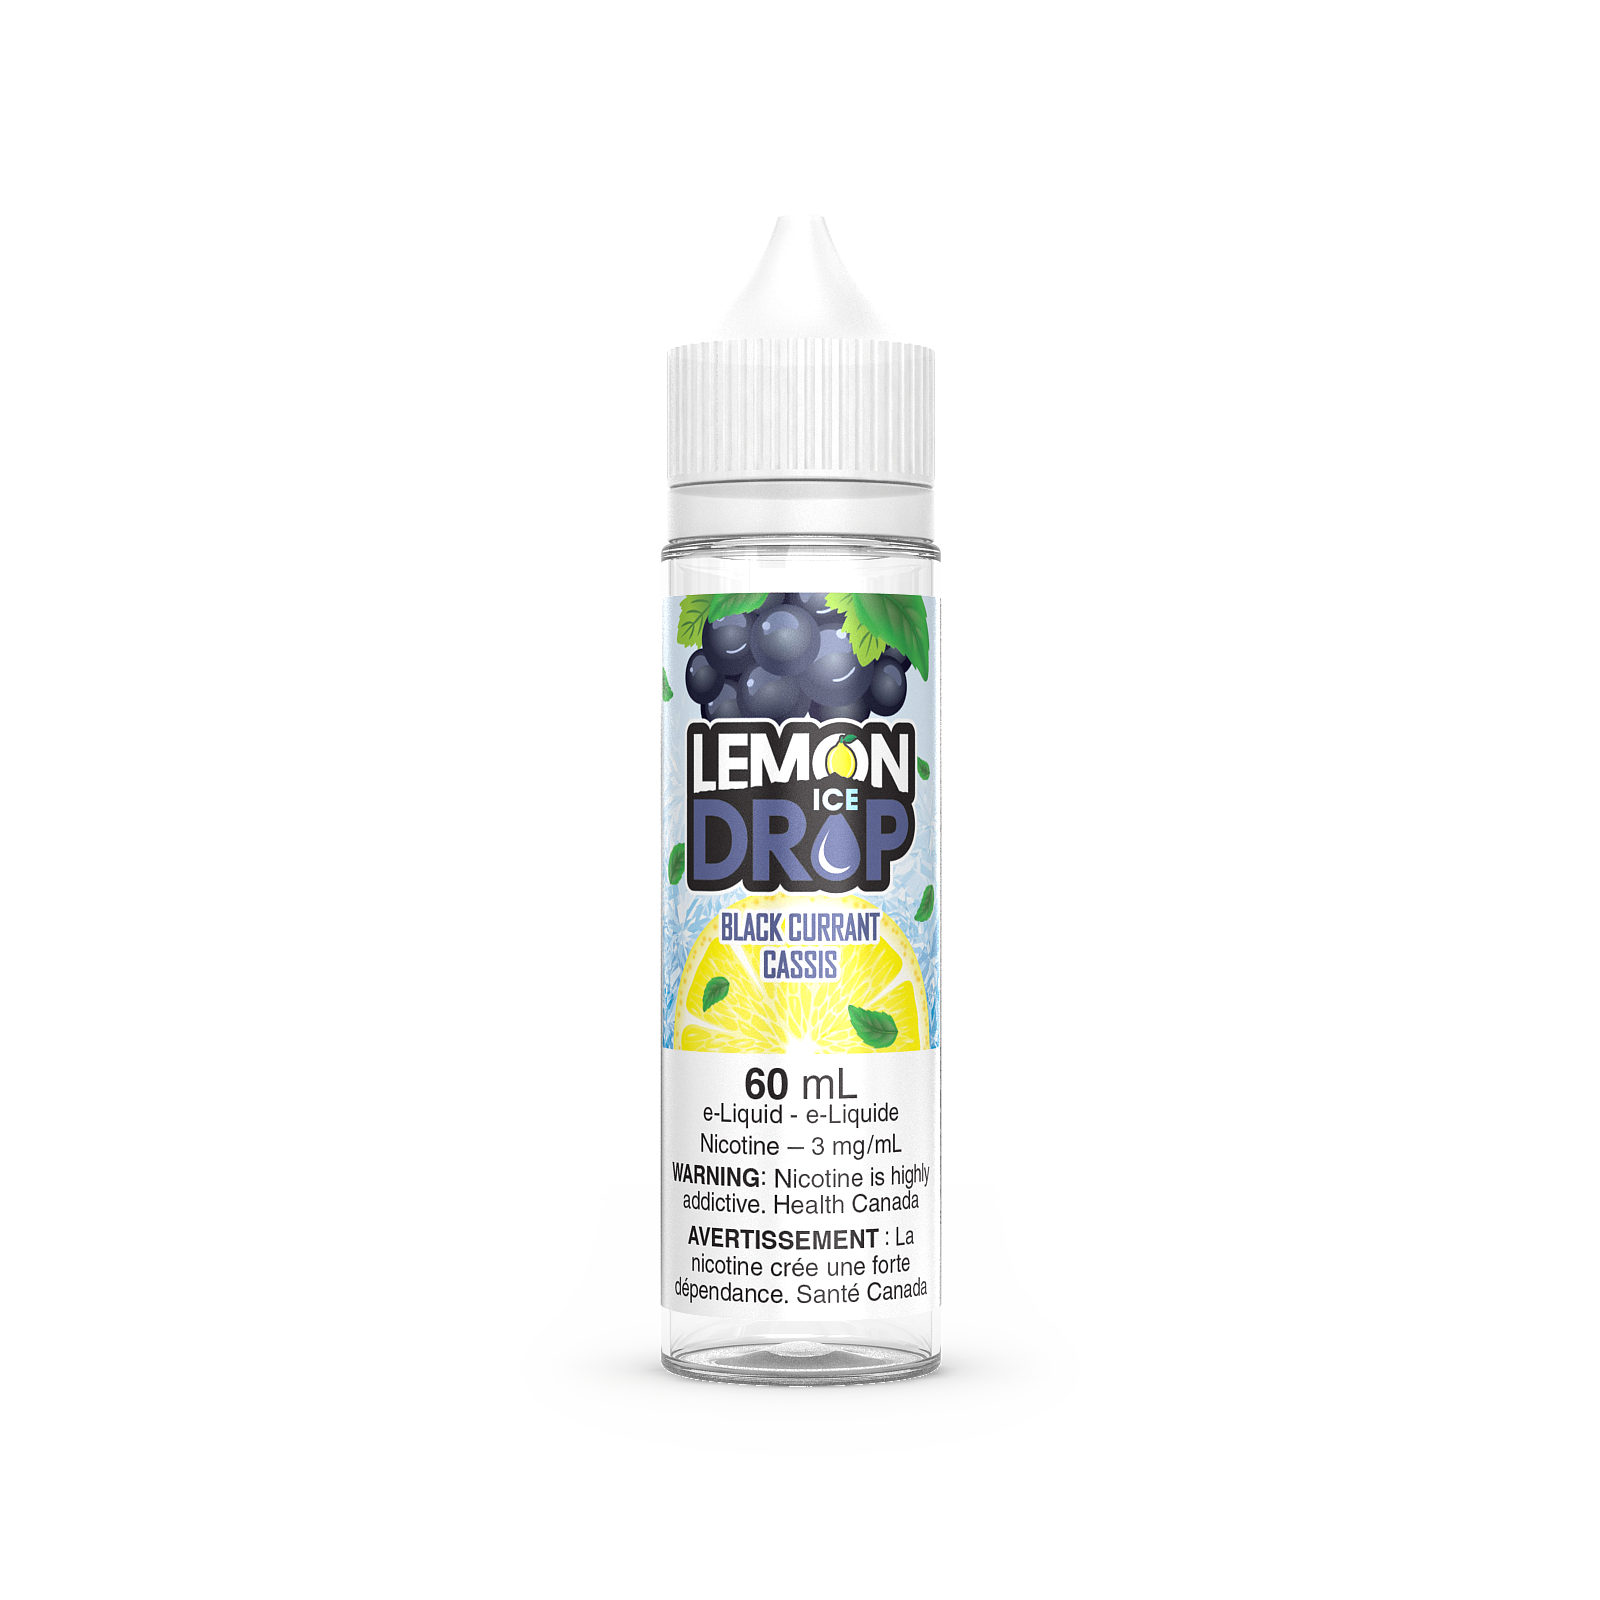 Black Currant - Lemon Drop ICE - 60ml - FREE BASE - E-Liquid